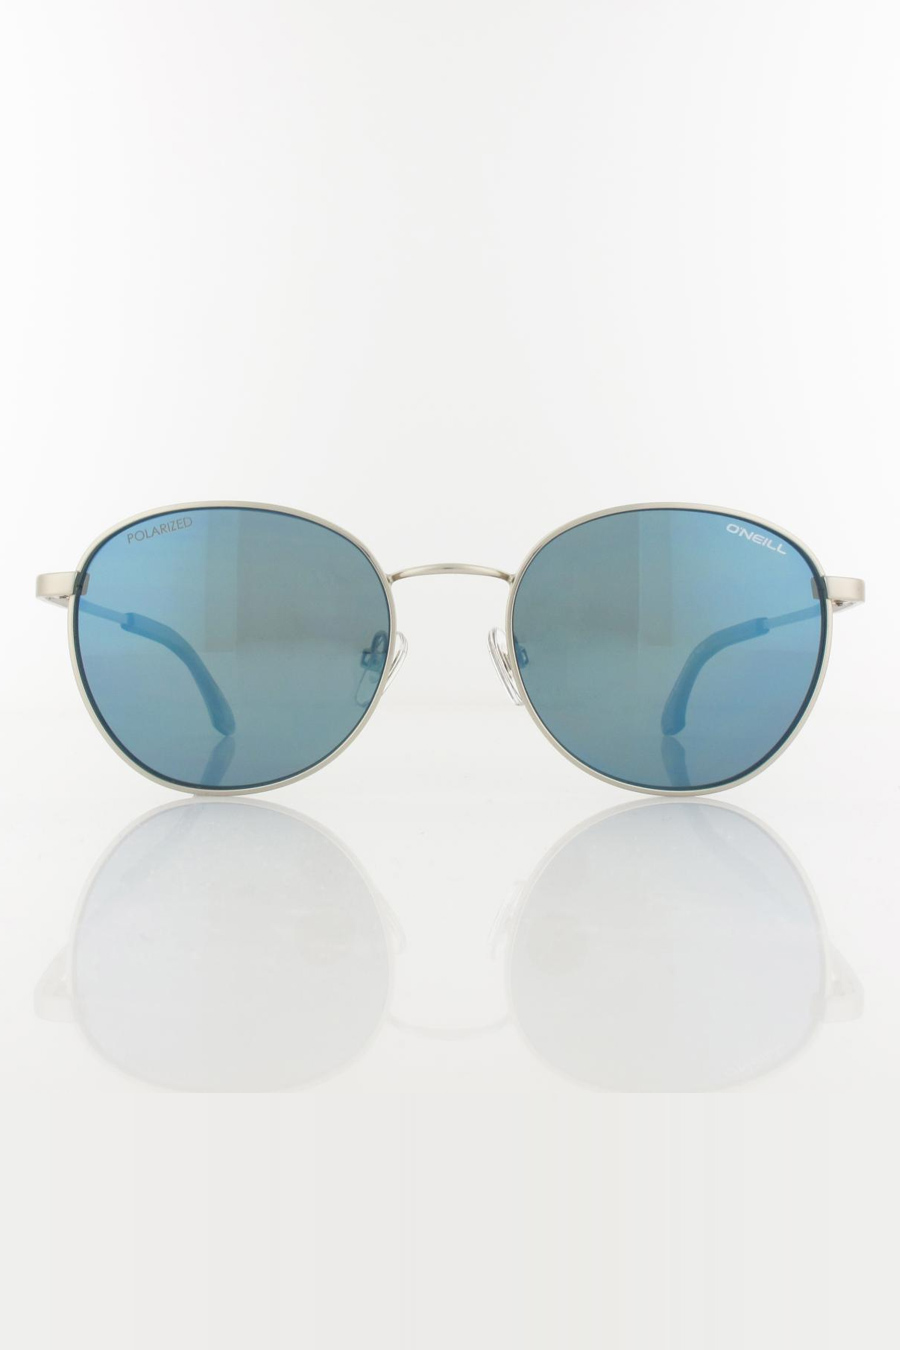 Солнечные очки ONEILL ONS-9013-20-002P